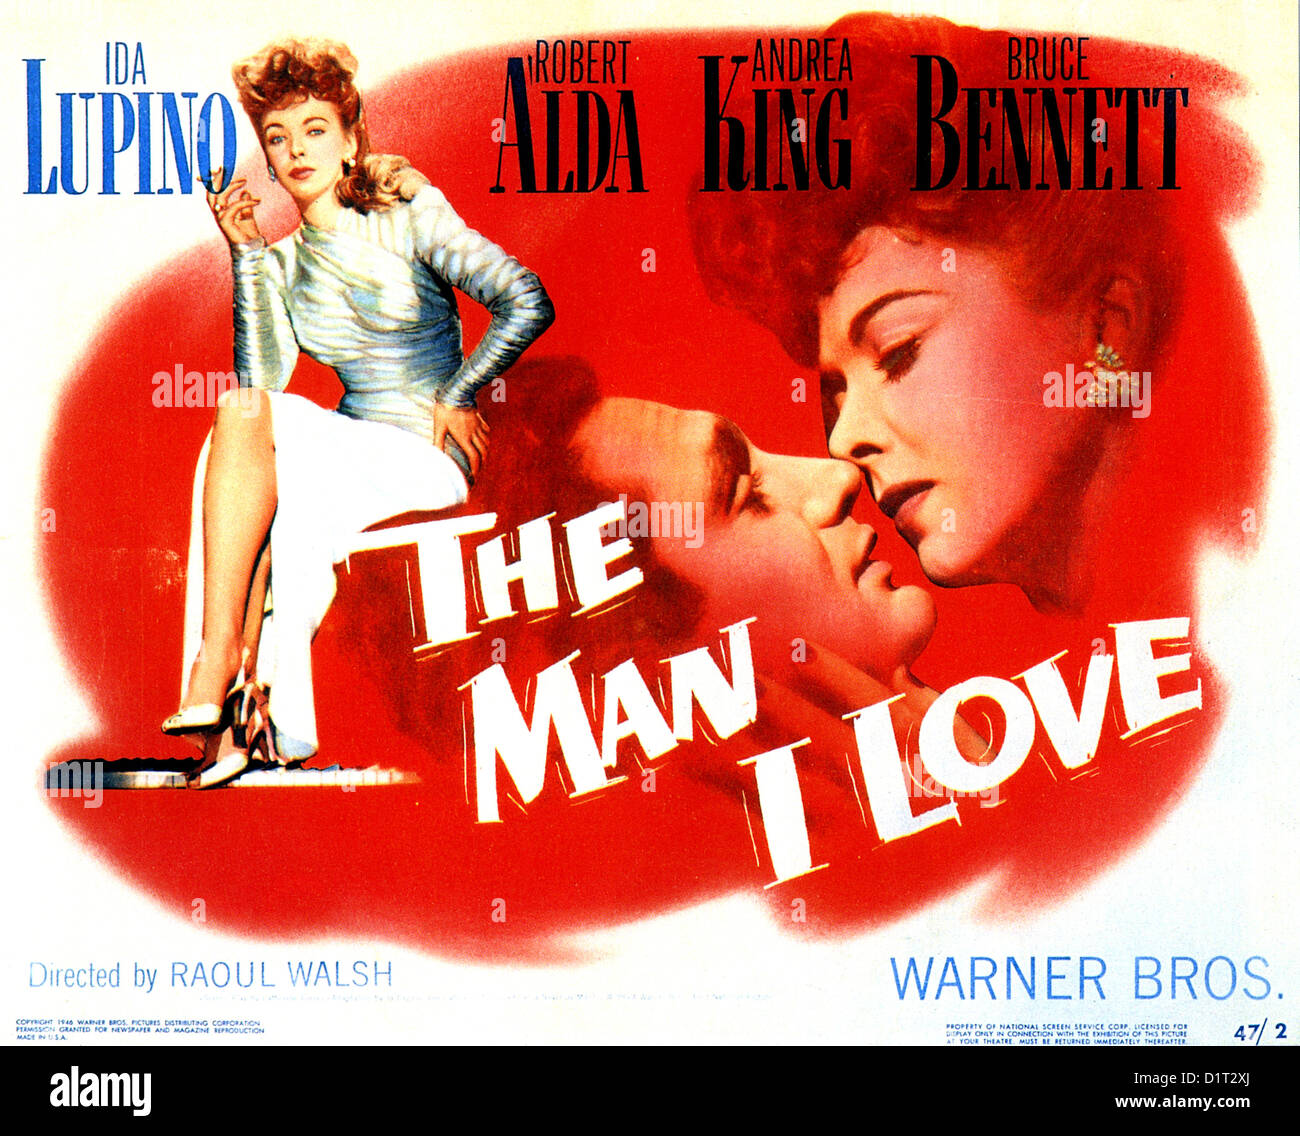 THE MAN I LOVE Poster for 1947 Warner Bros film with Ida Lupino and Robert  Alda Stock Photo - Alamy